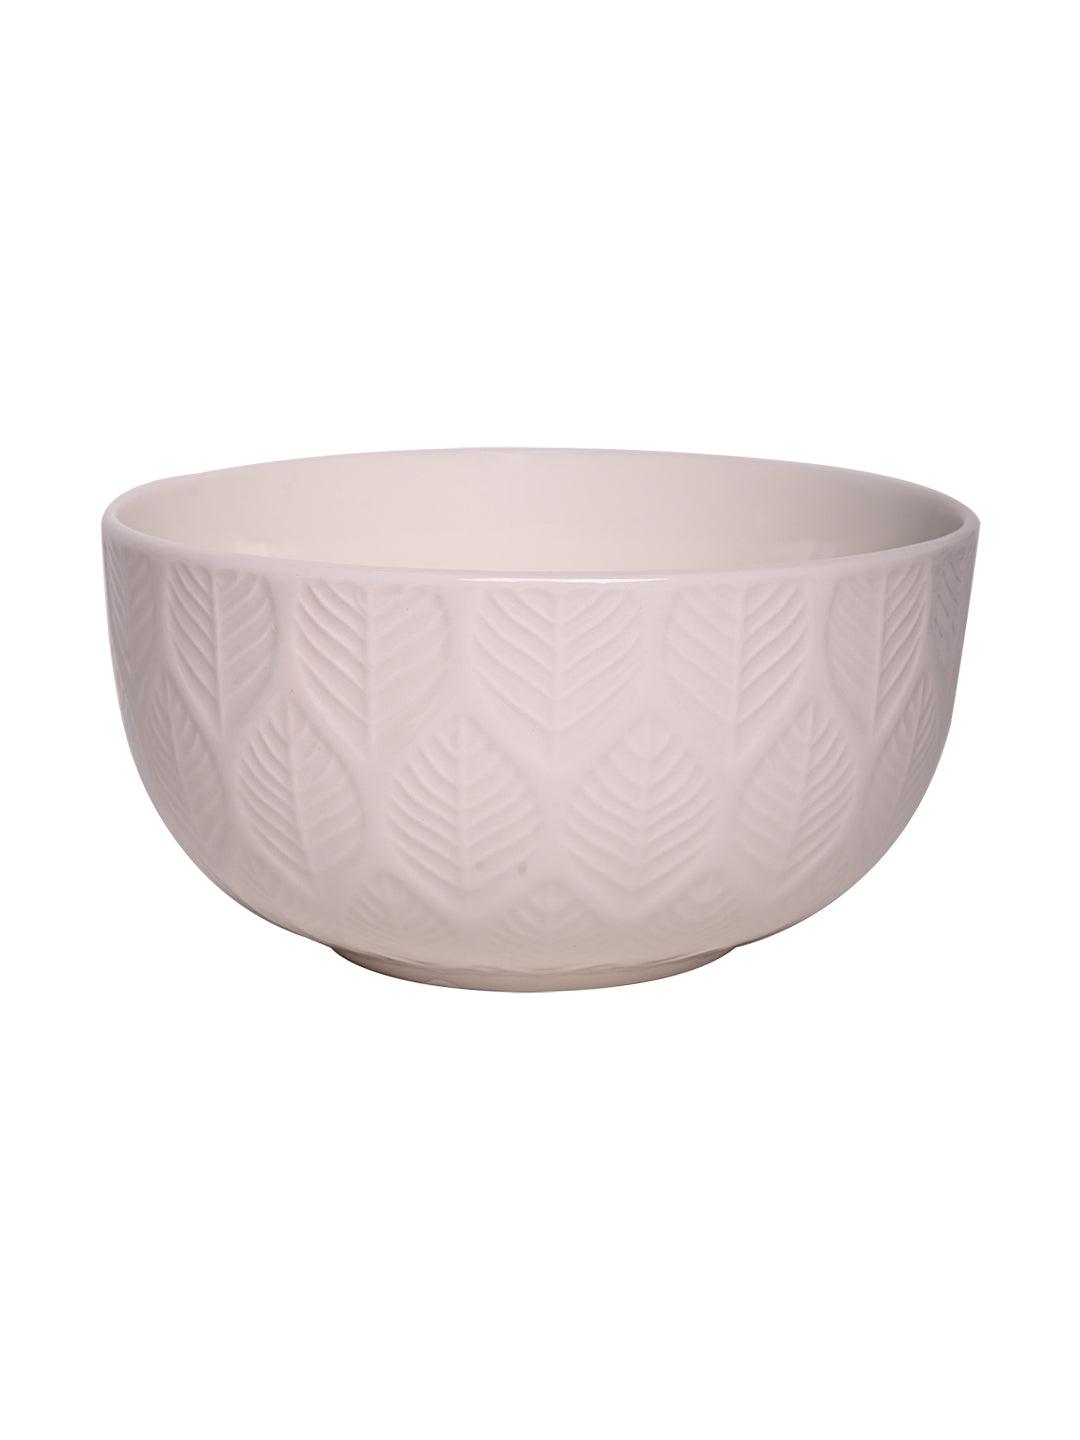 Ivory Ceramic Bowl - 580Ml, Leaf Pattern - MARKET 99